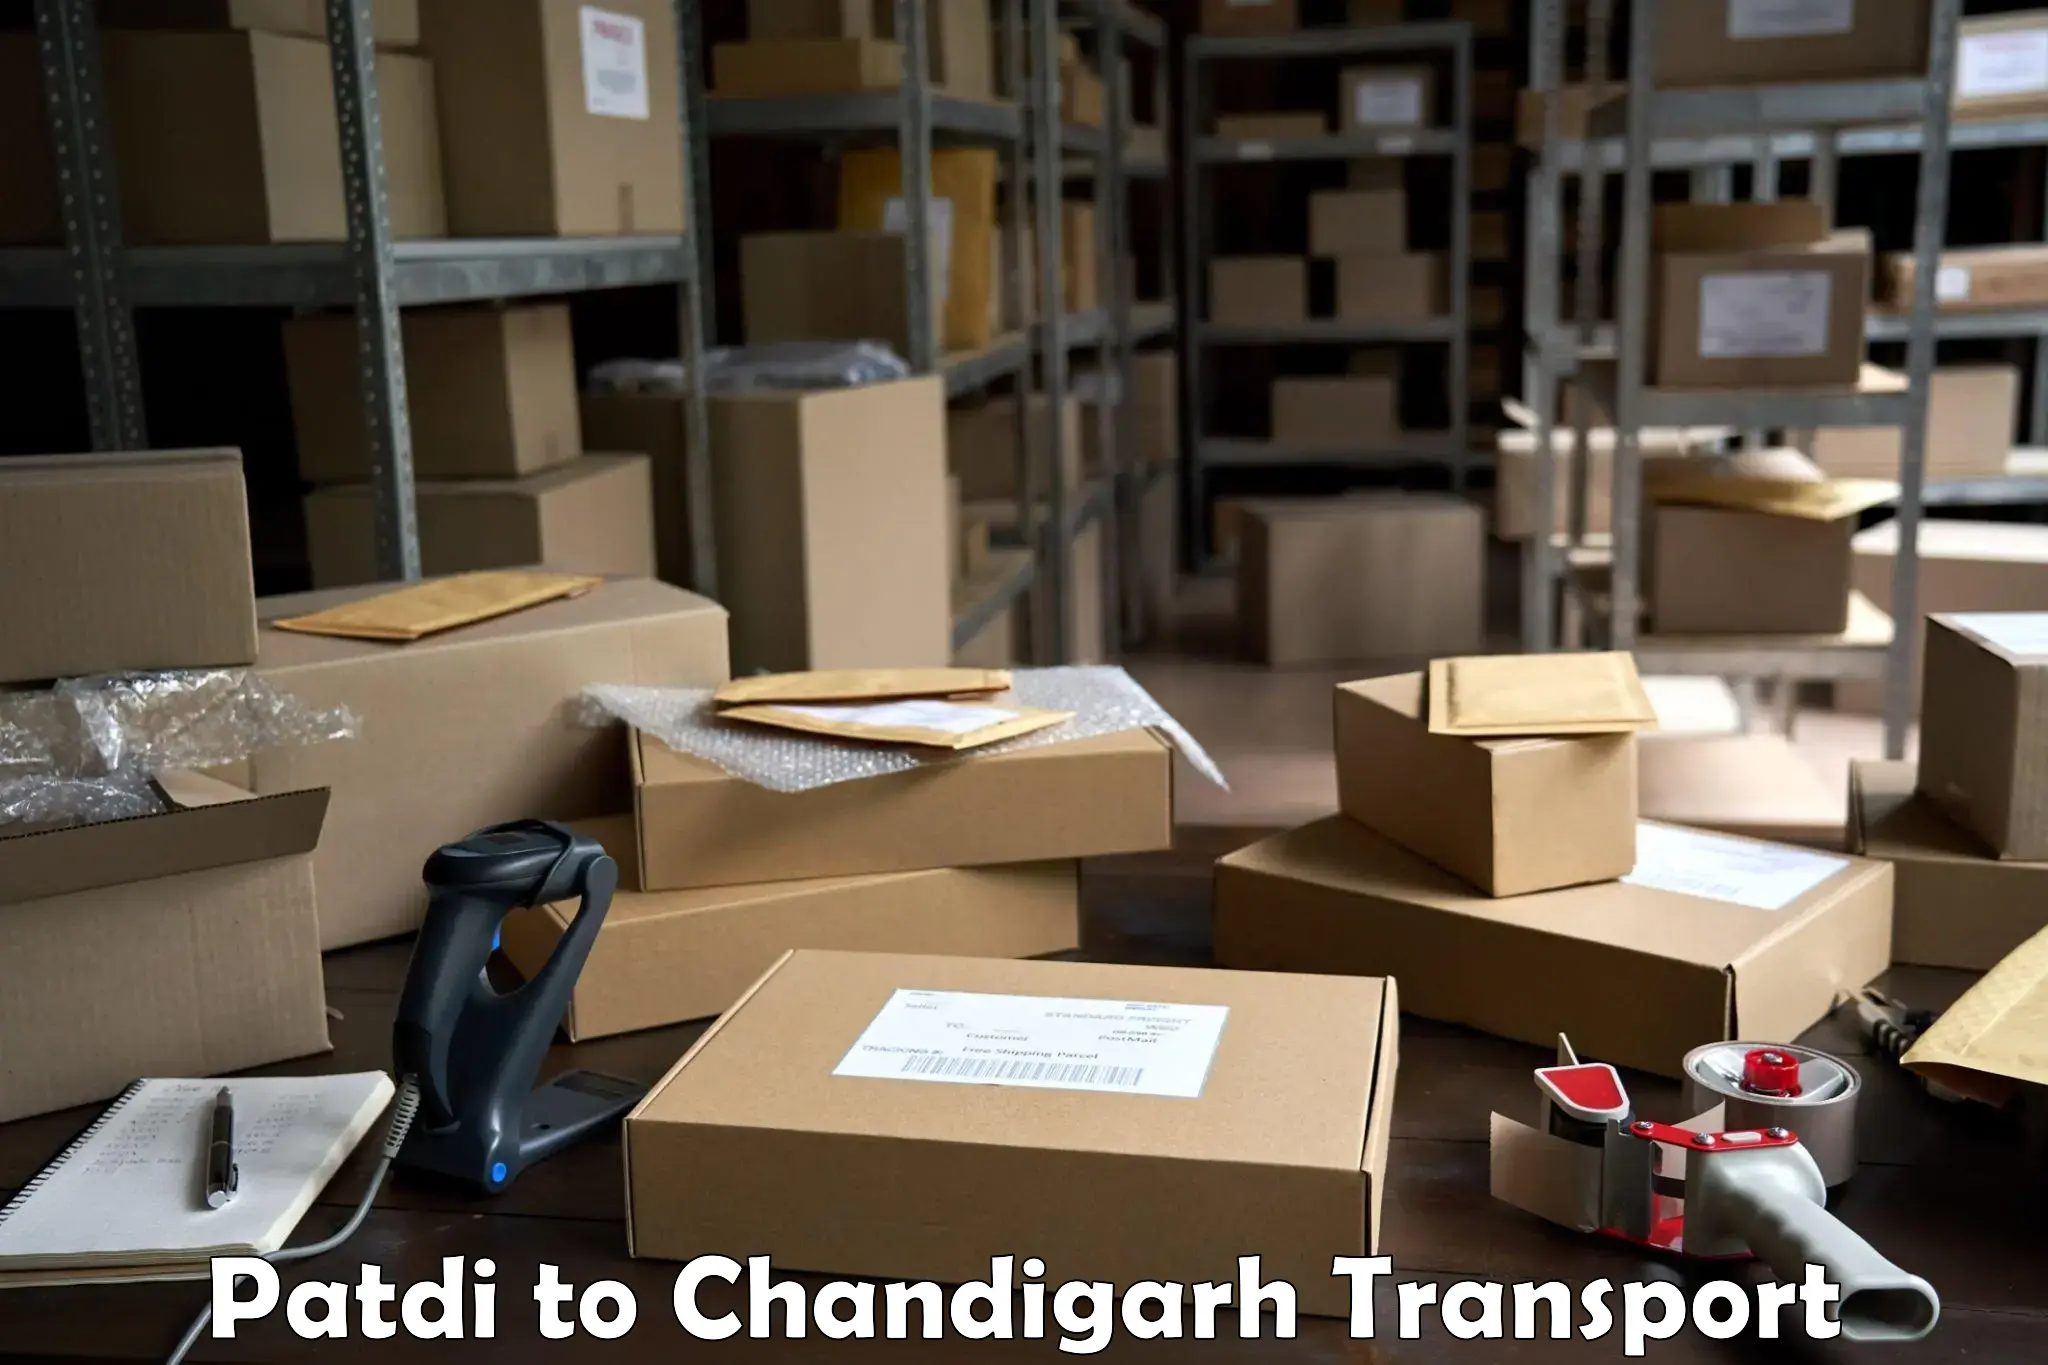 Truck transport companies in India Patdi to Chandigarh